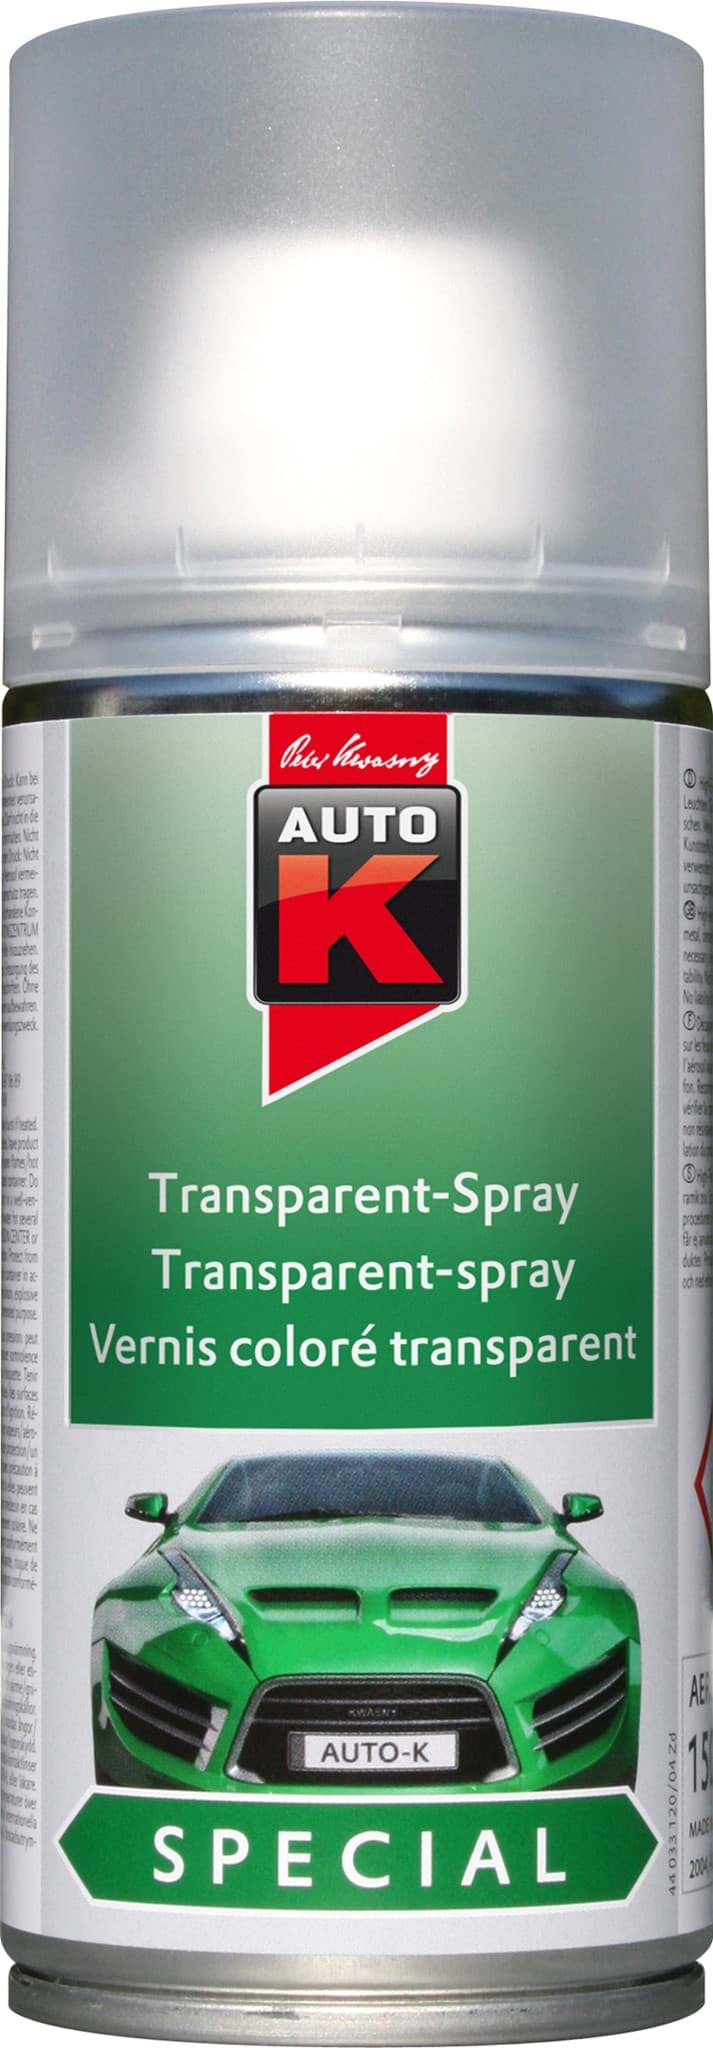 Afbeelding van Auto-K Transparent Remover 150ml